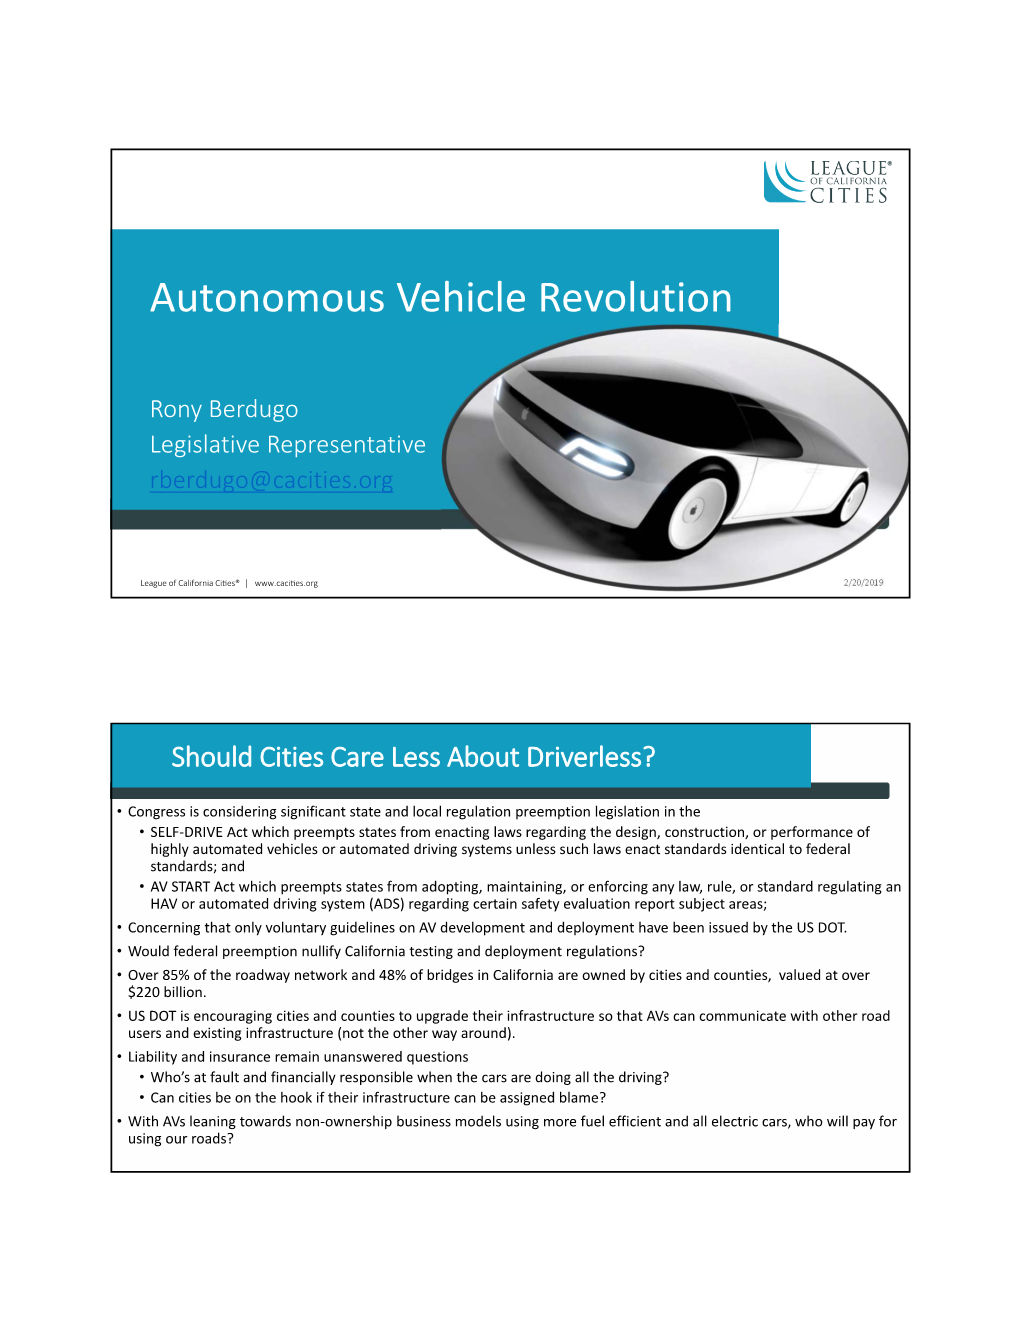 Update on the Autonomous Vehicle Revolution